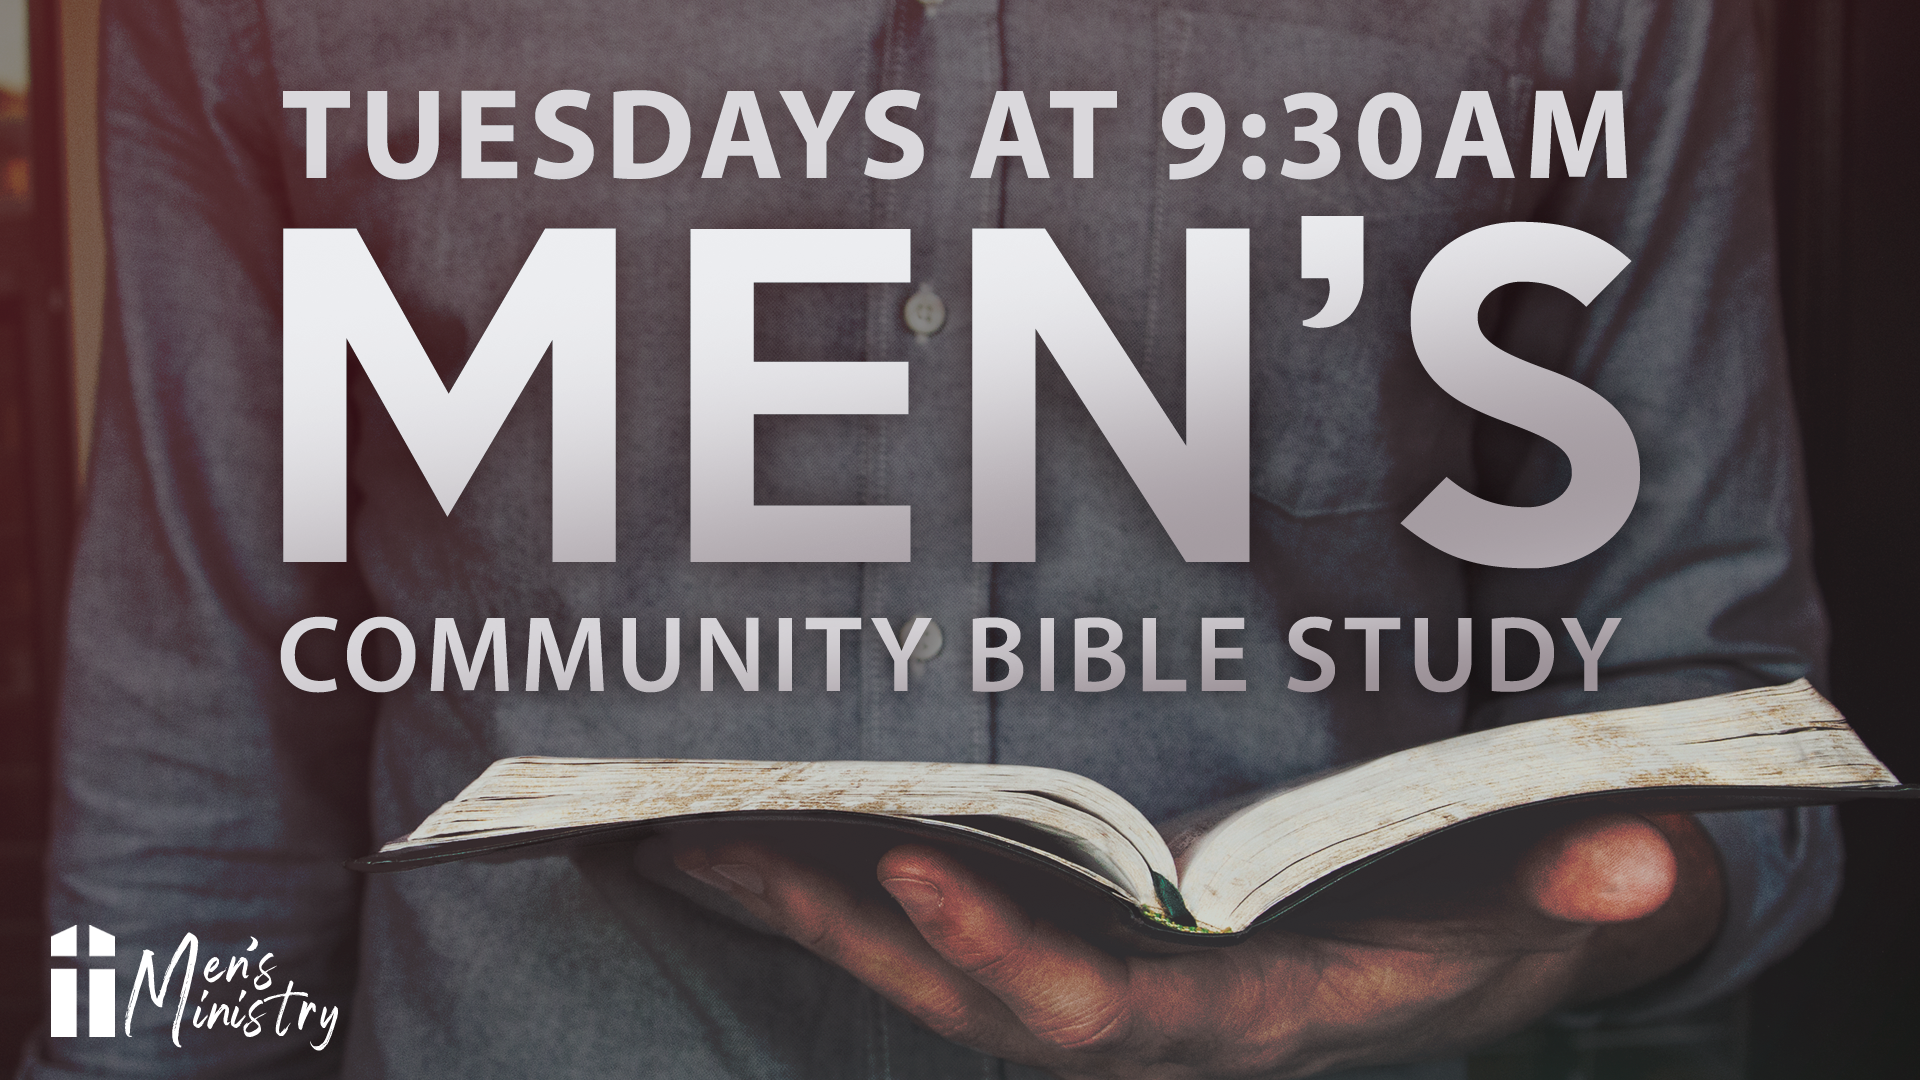 Men's Bible Study image